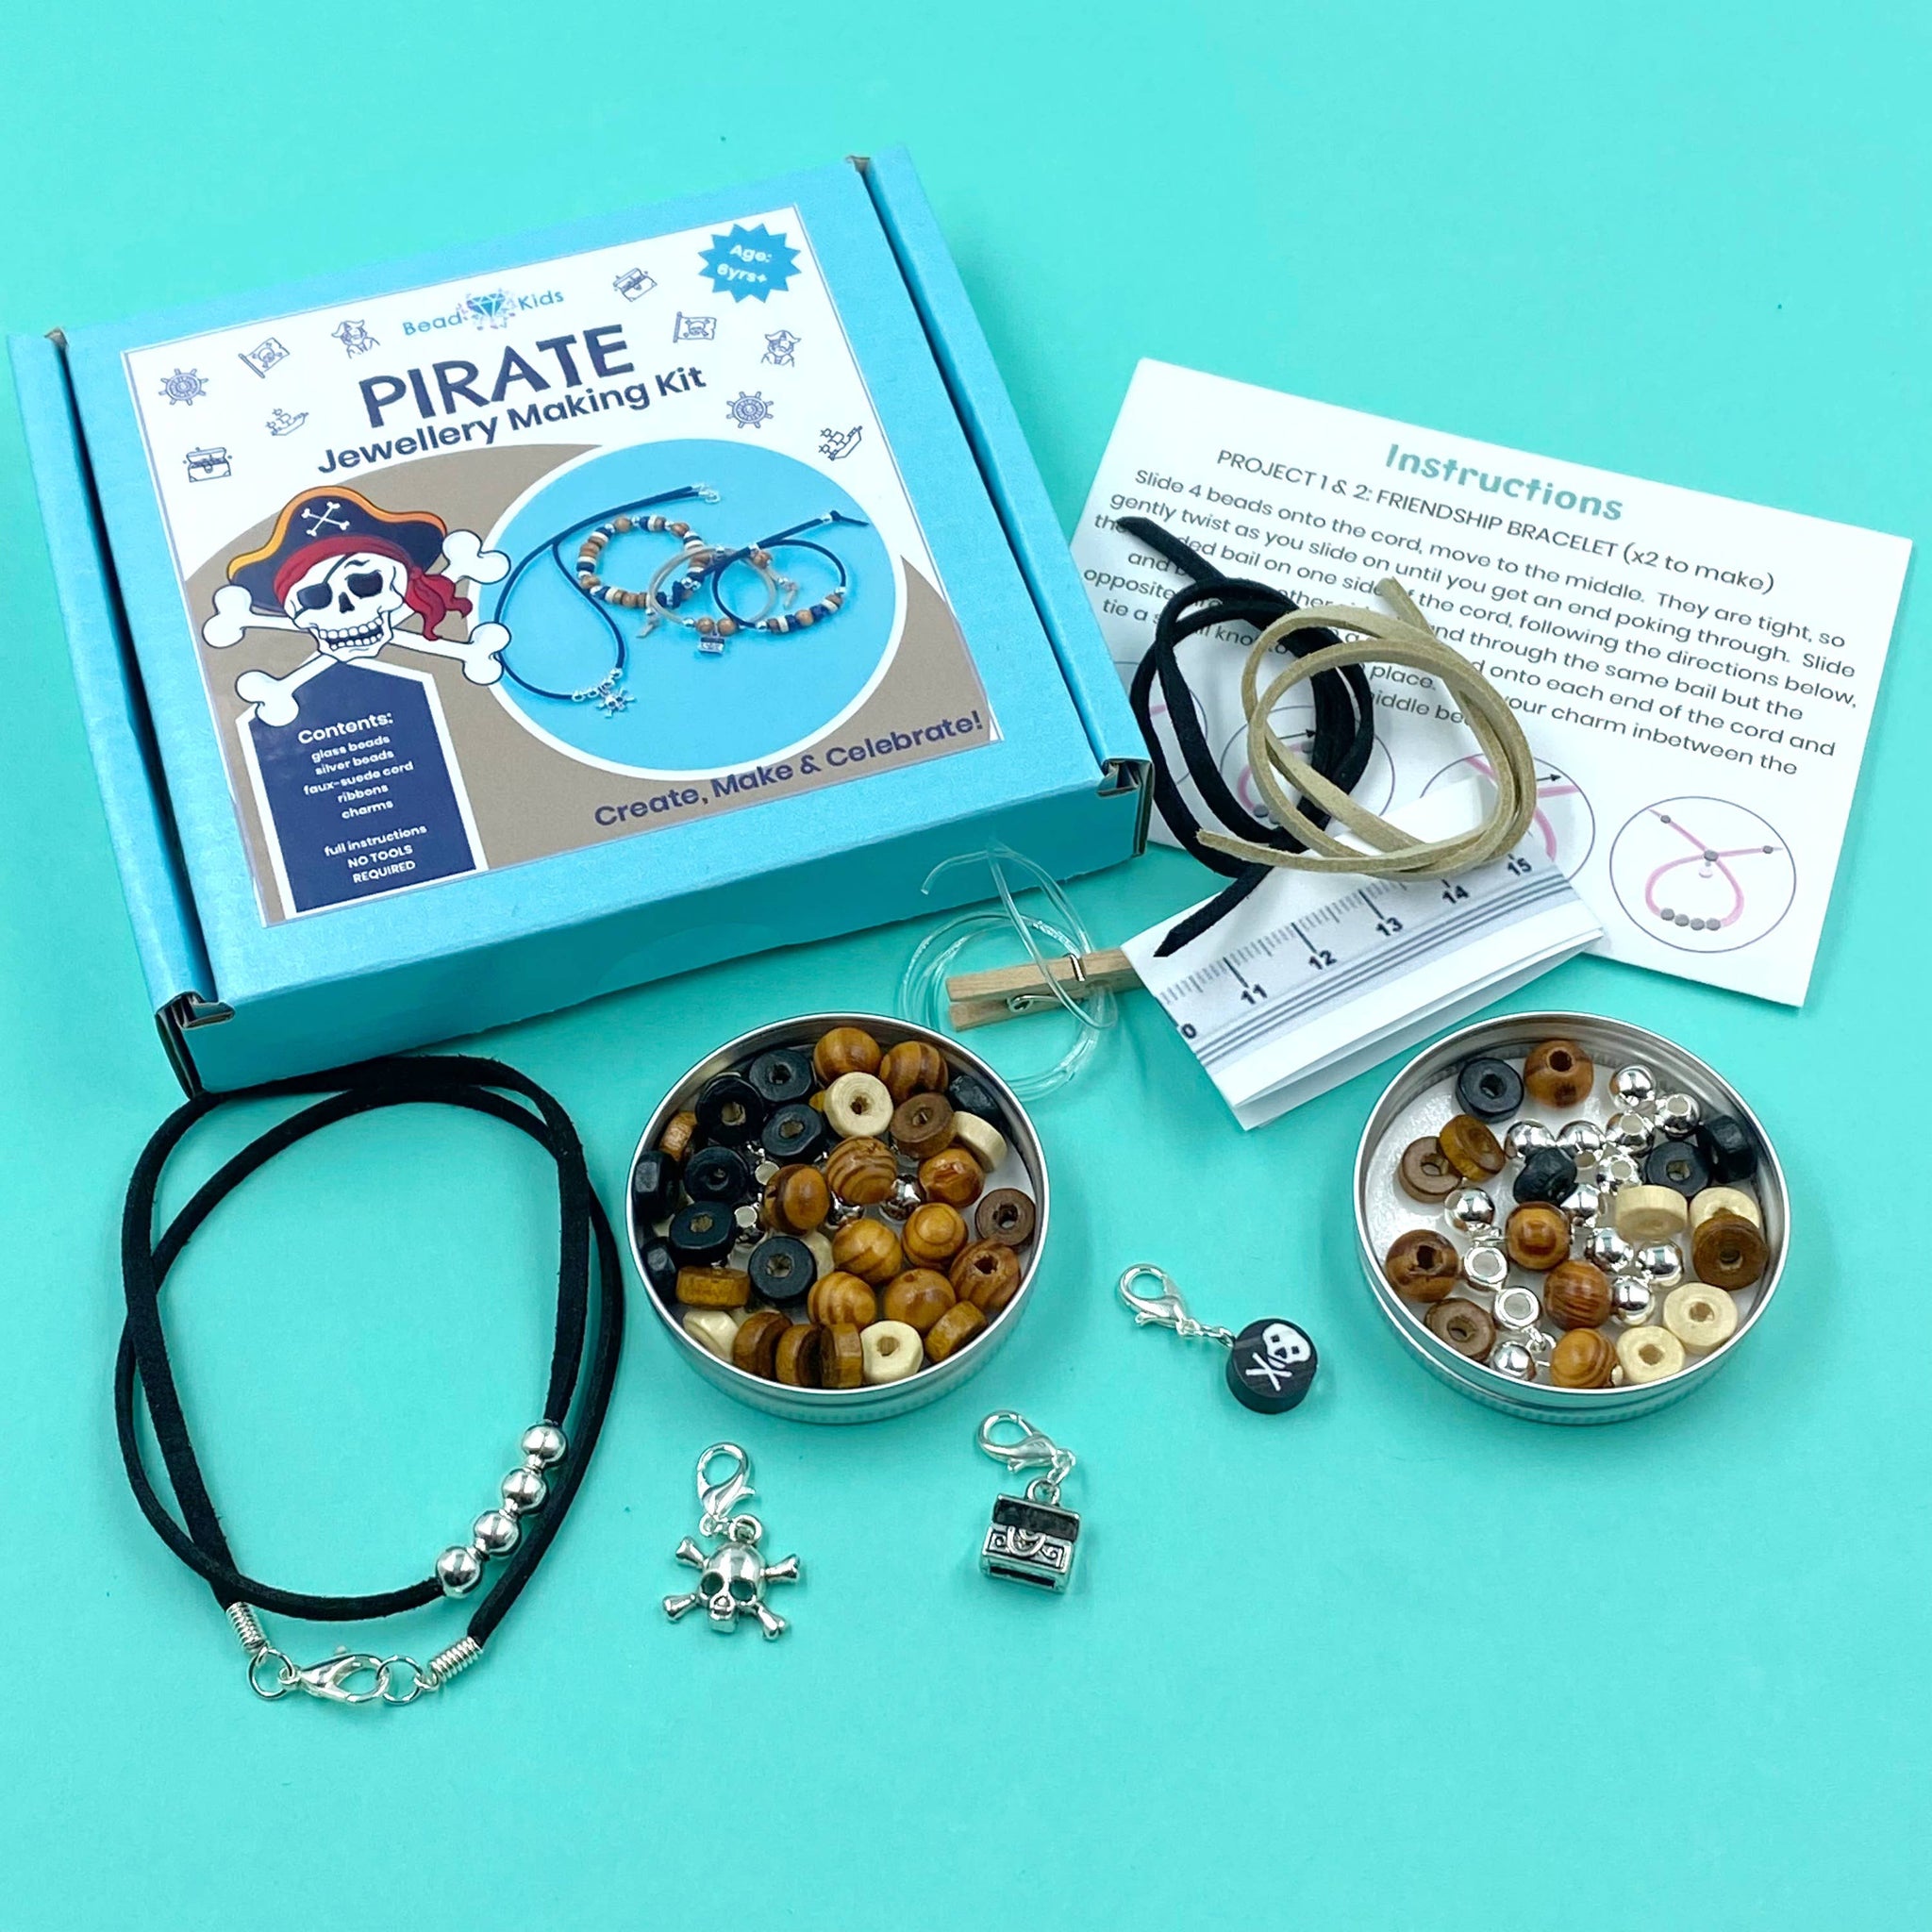 Pirate Jewellery Making Kit for Children